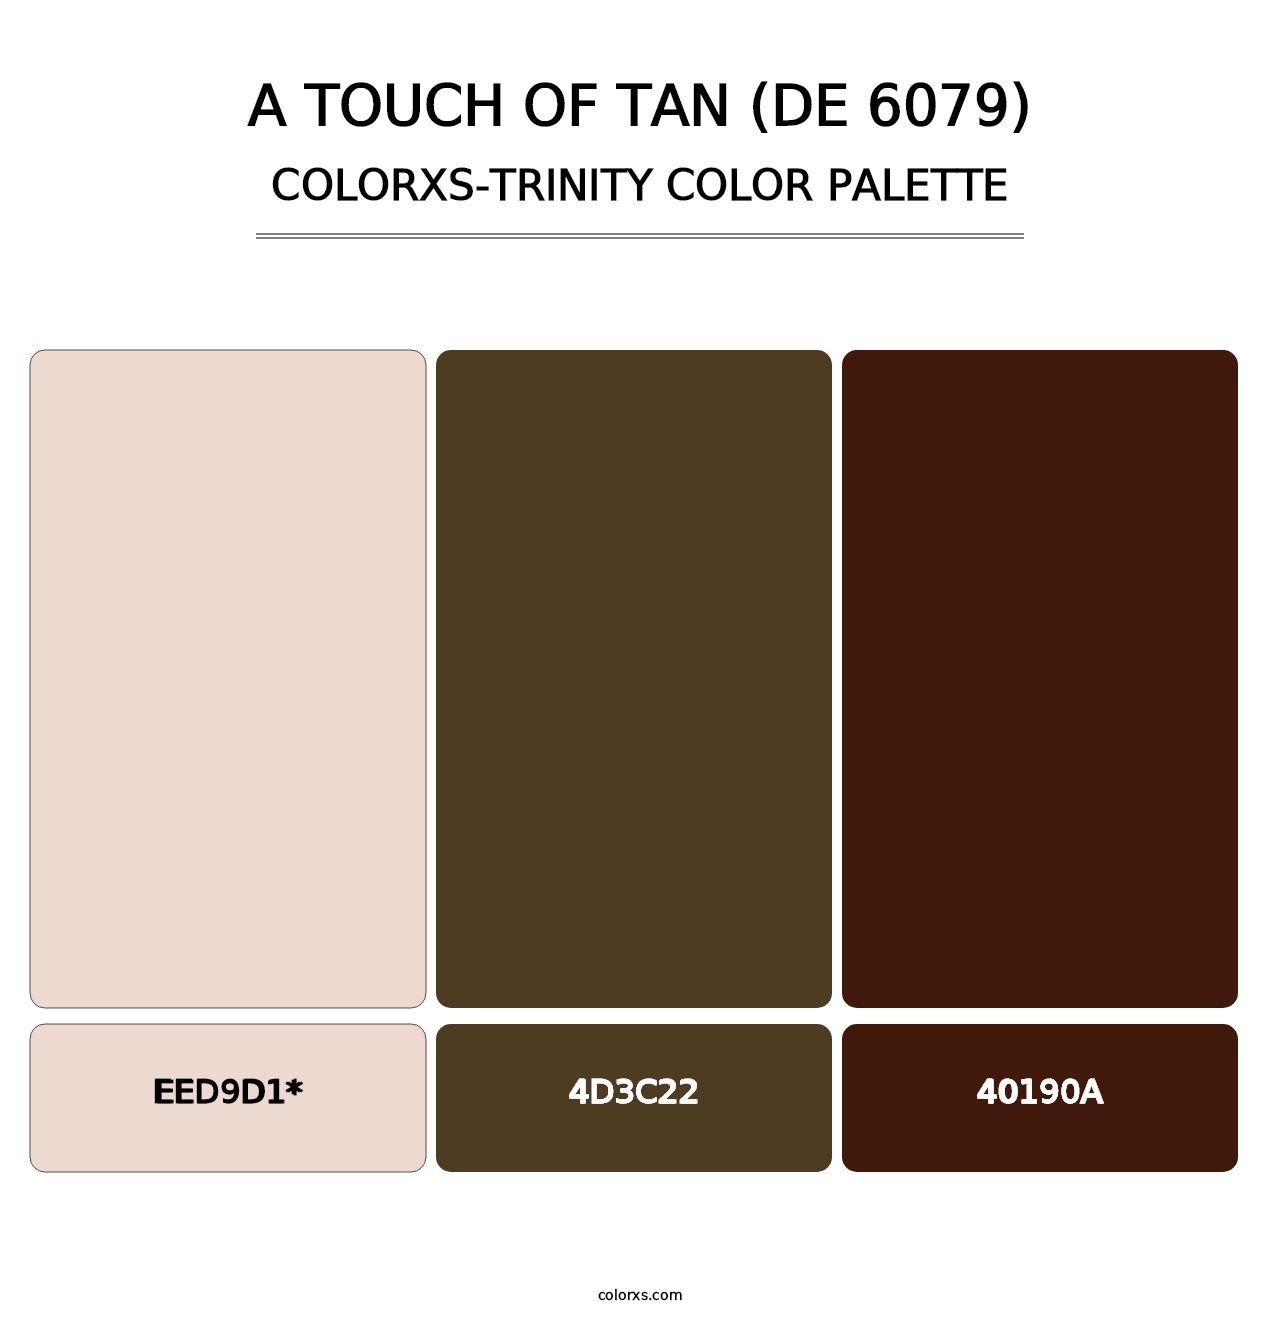 A Touch of Tan (DE 6079) - Colorxs Trinity Palette